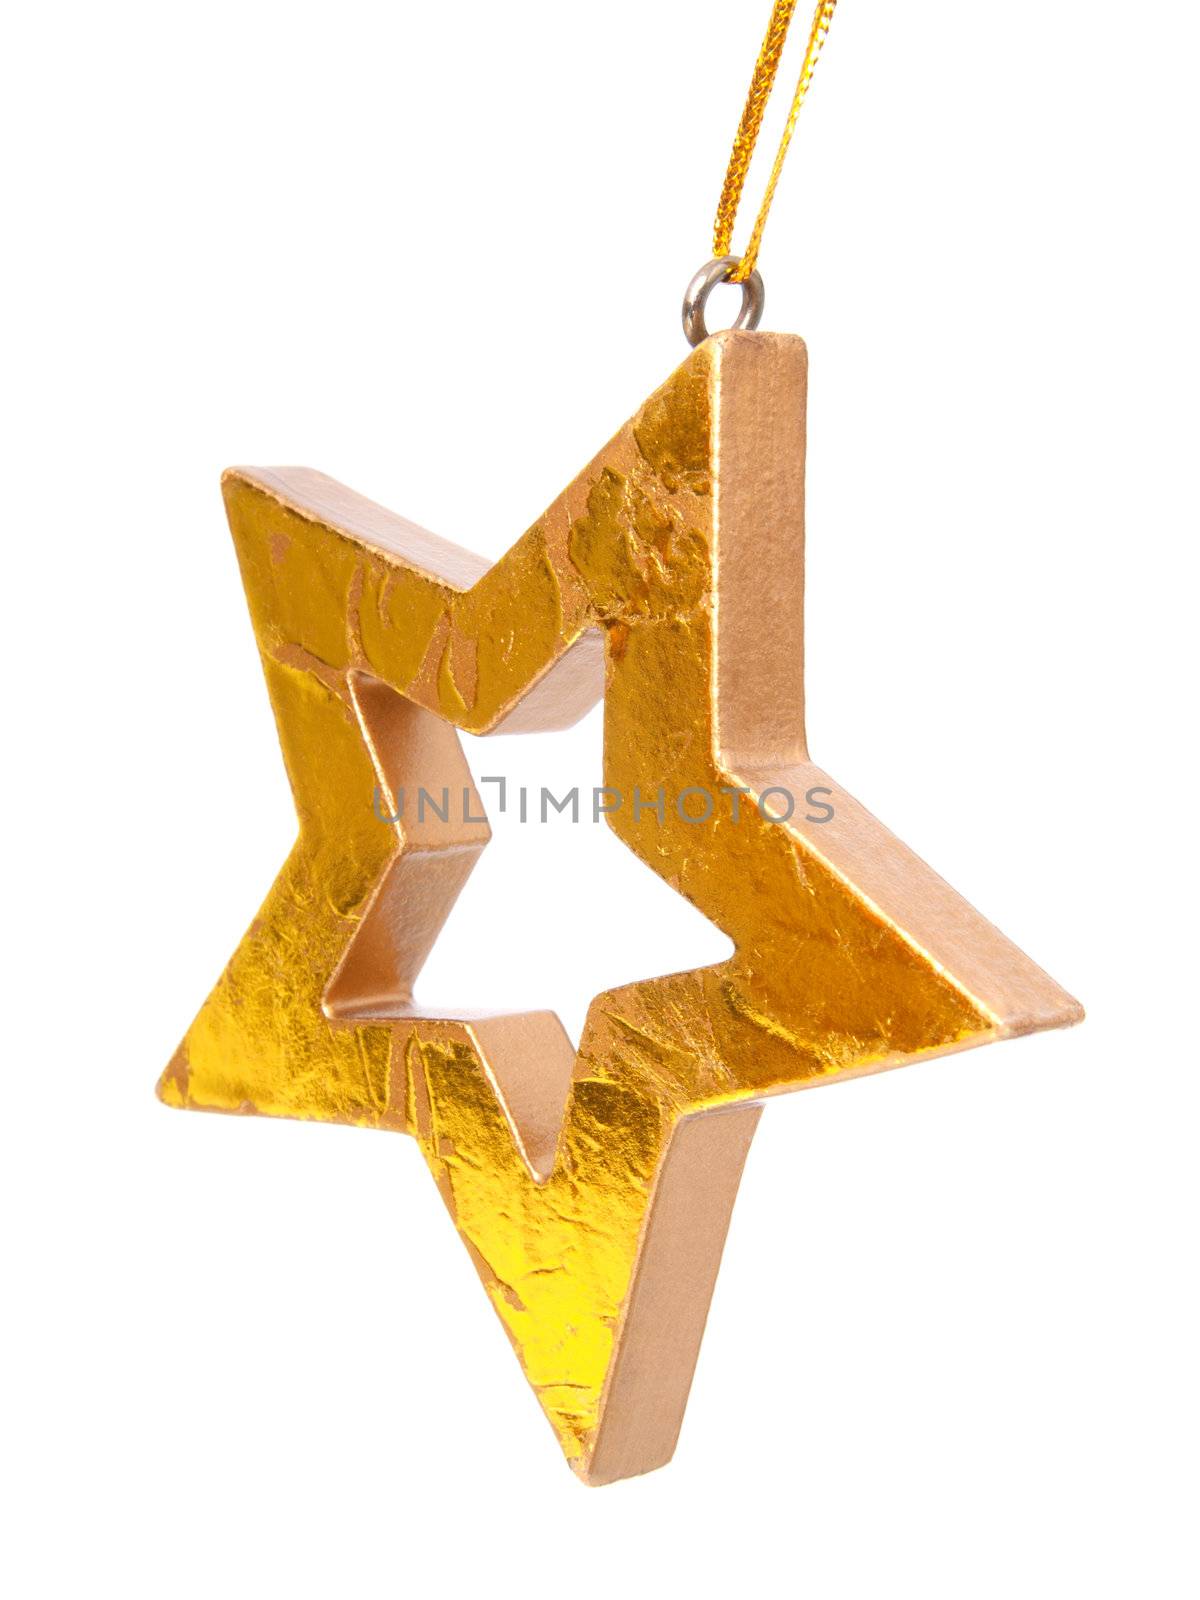 Golden Christmas star, isolated on white background  by motorolka